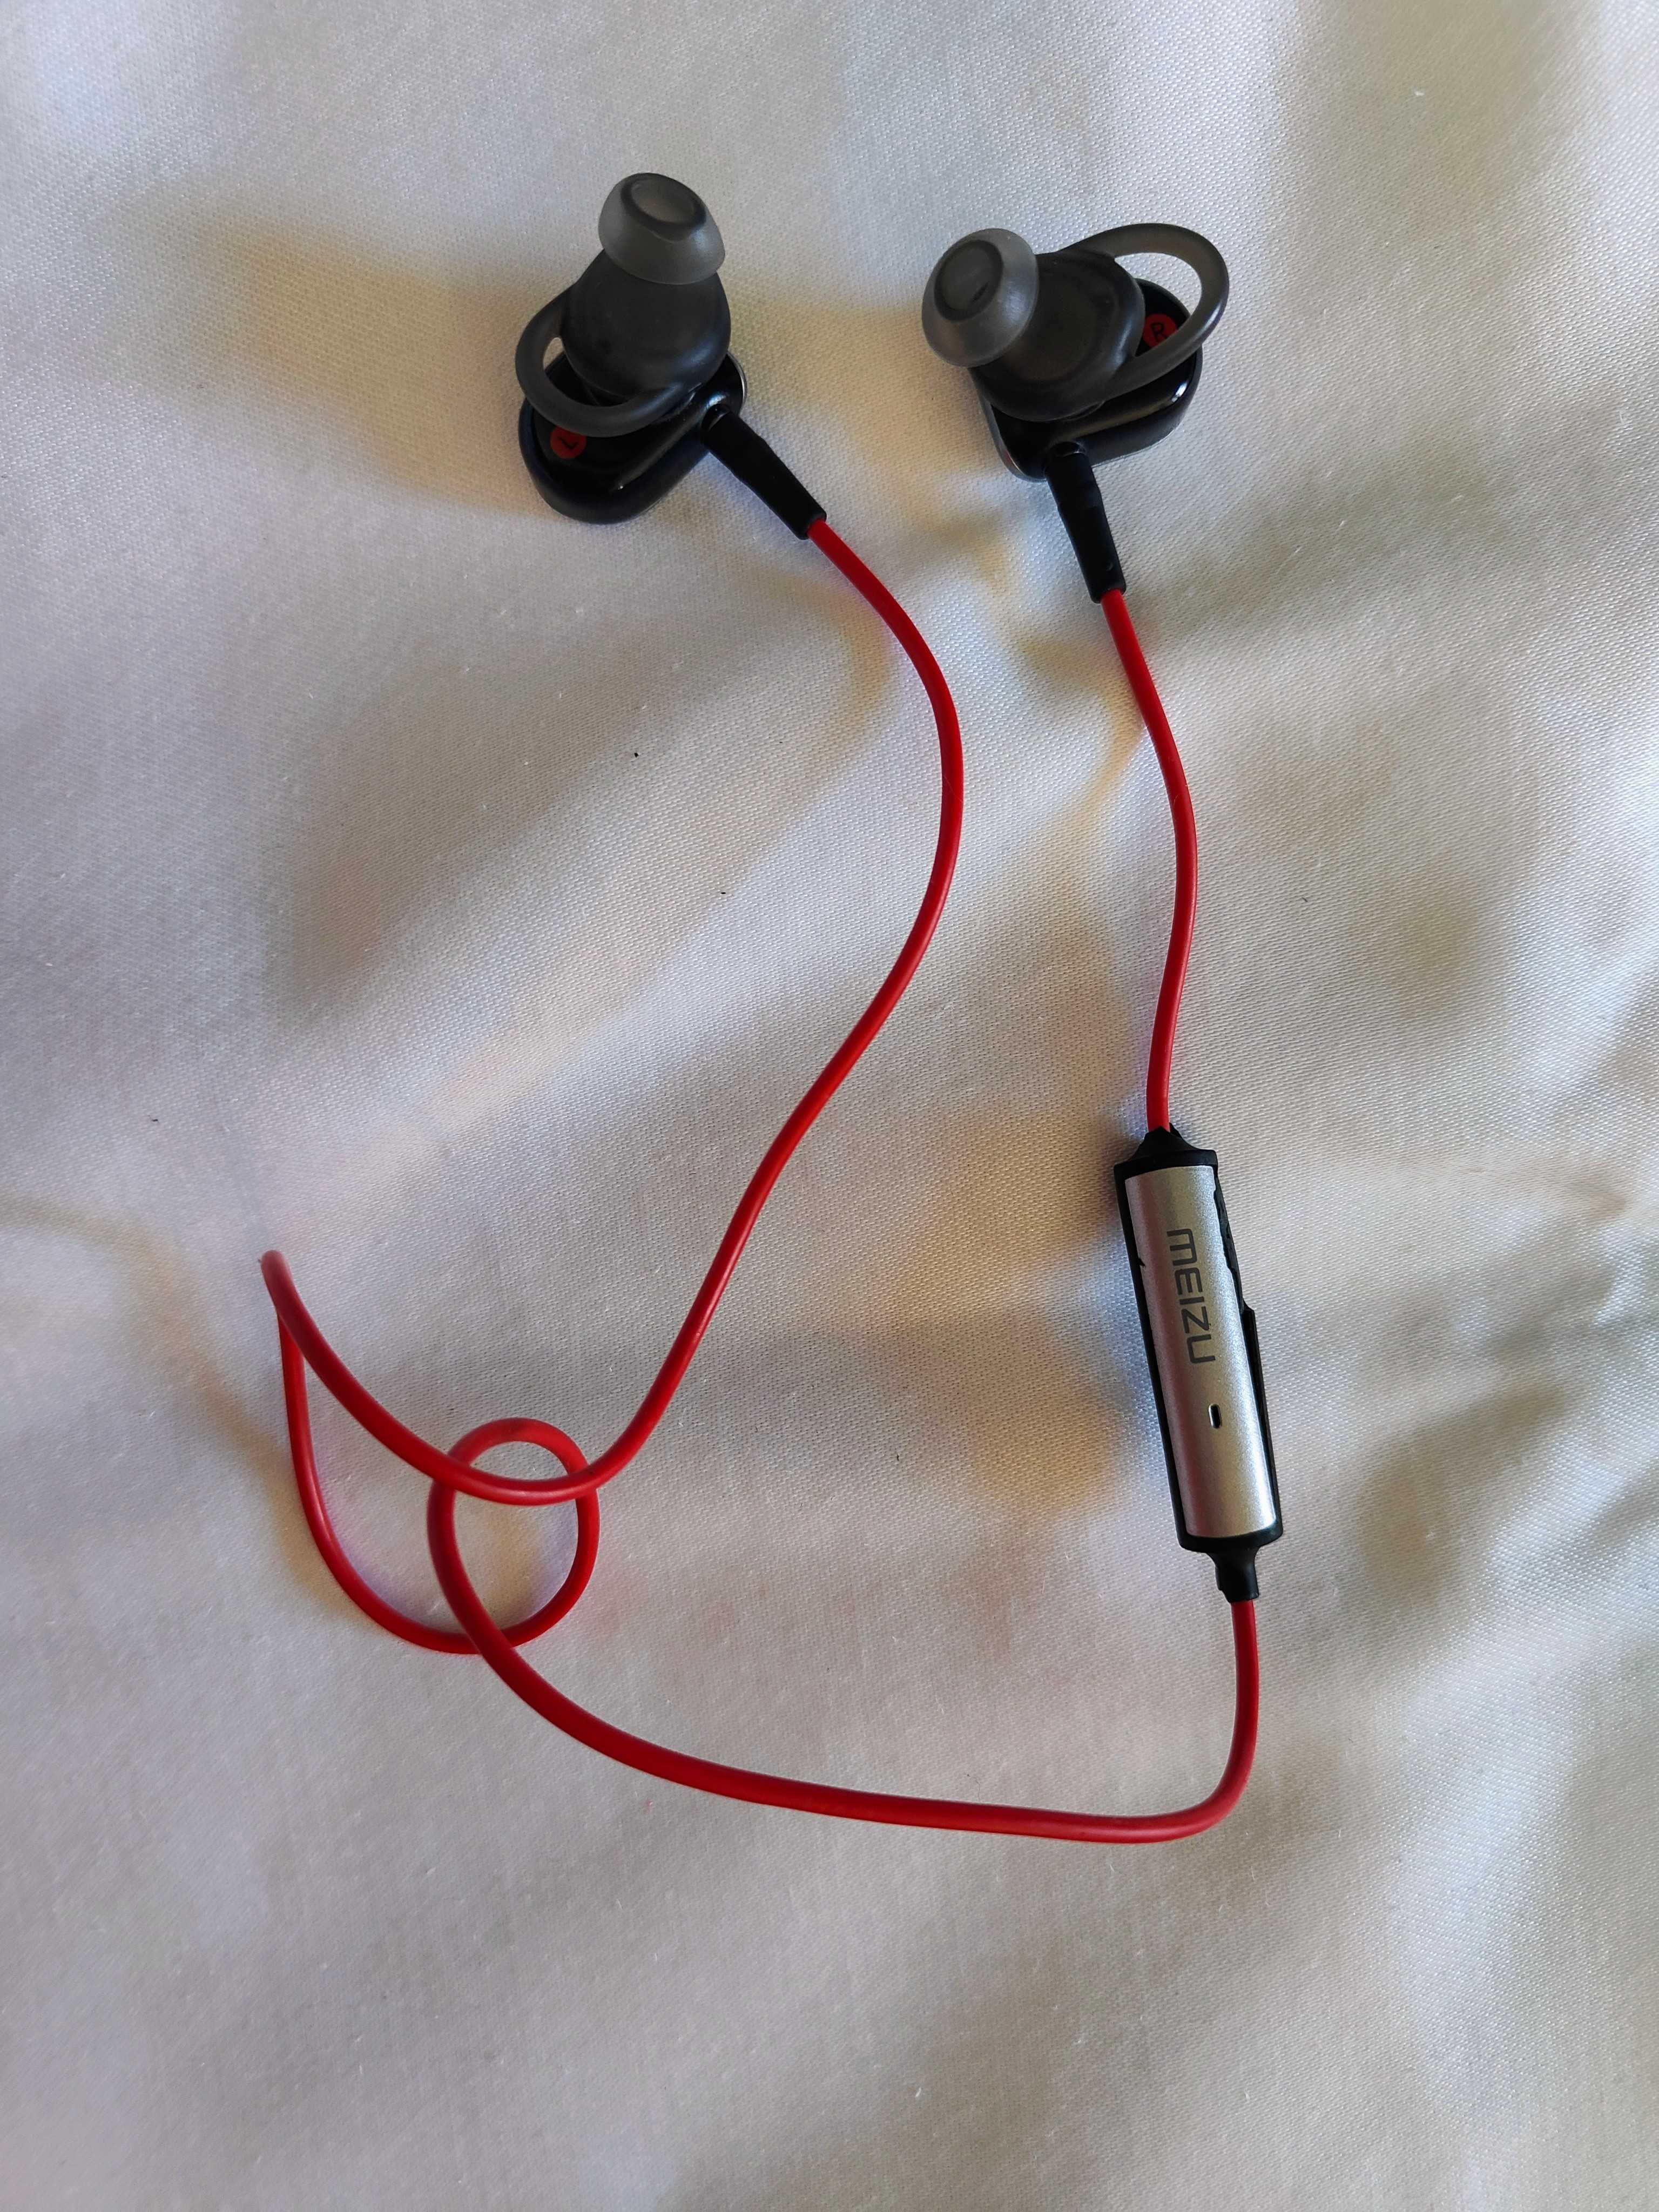 MEIZU EP51 Sports Bluetooth Earphones